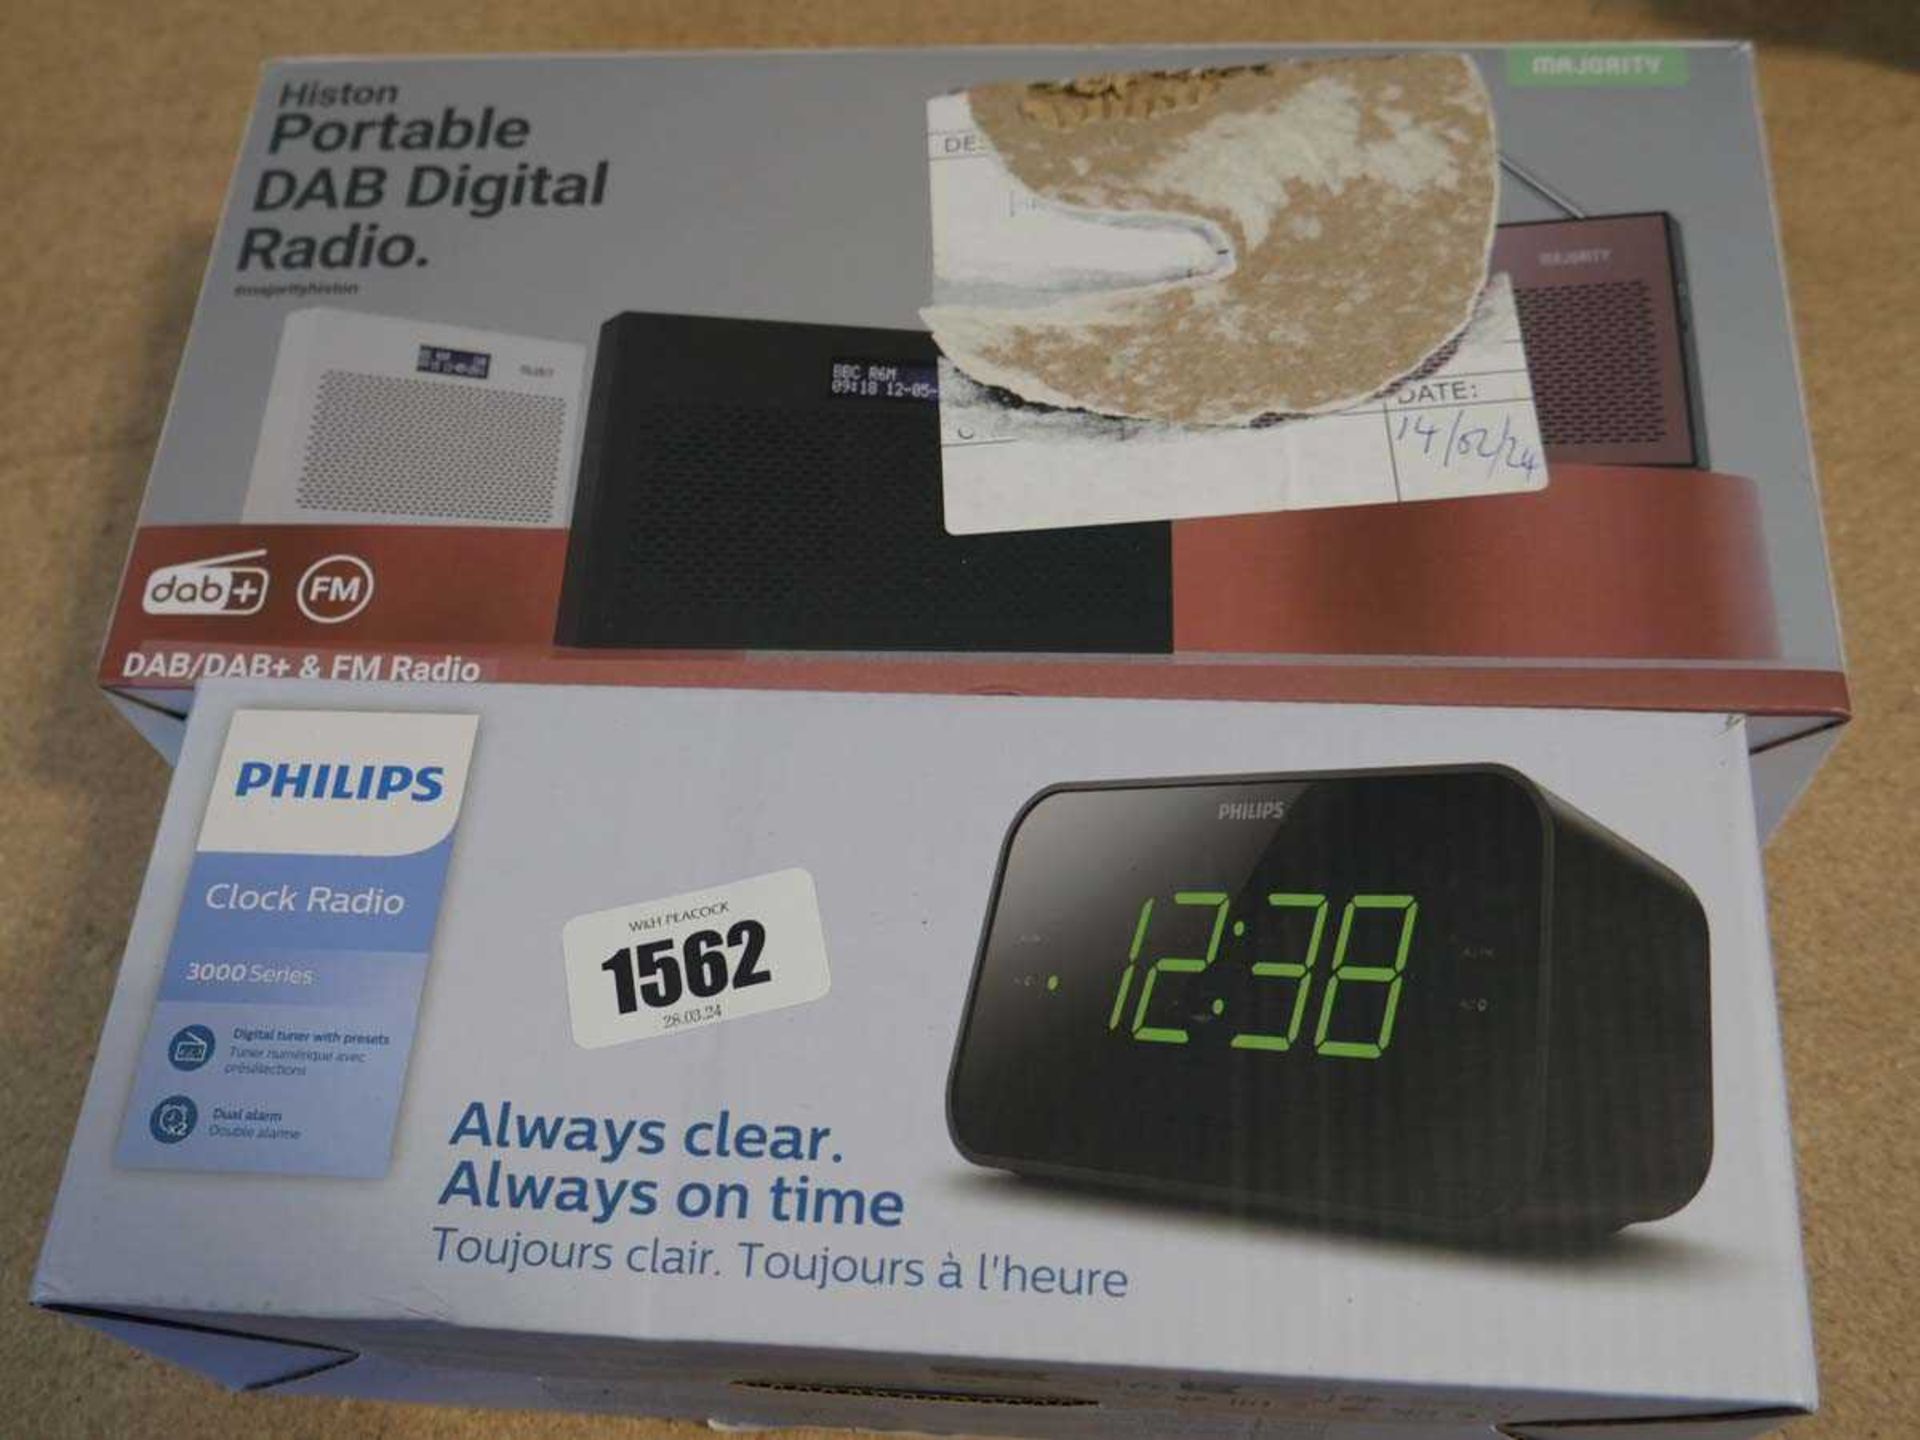 Philips clock radio 3000 series with Histon portable DAB digital radio